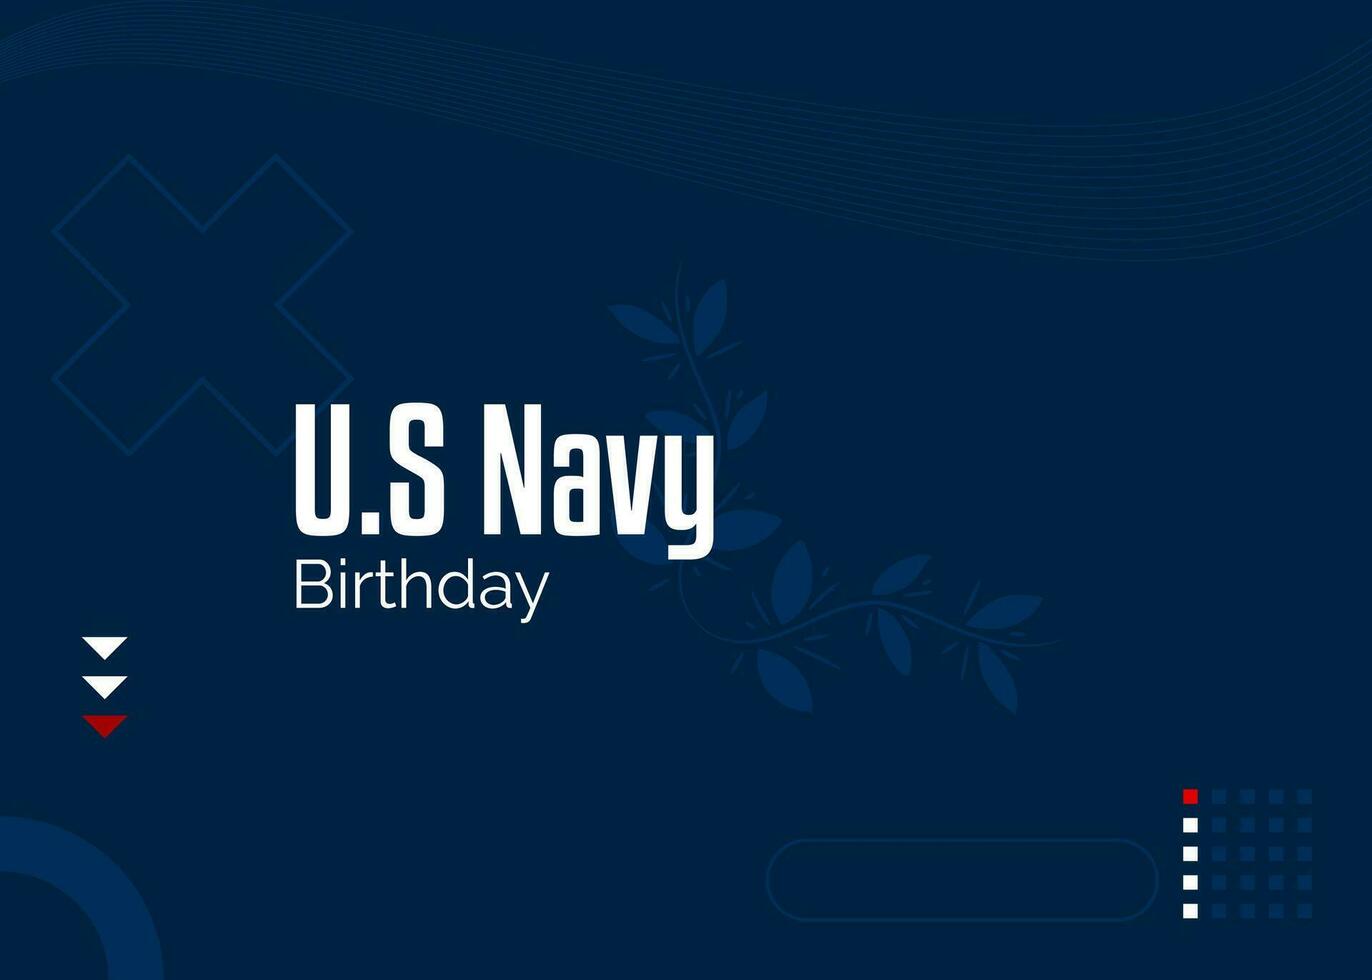 marine anniversaire. content anniversaire marine vecteur